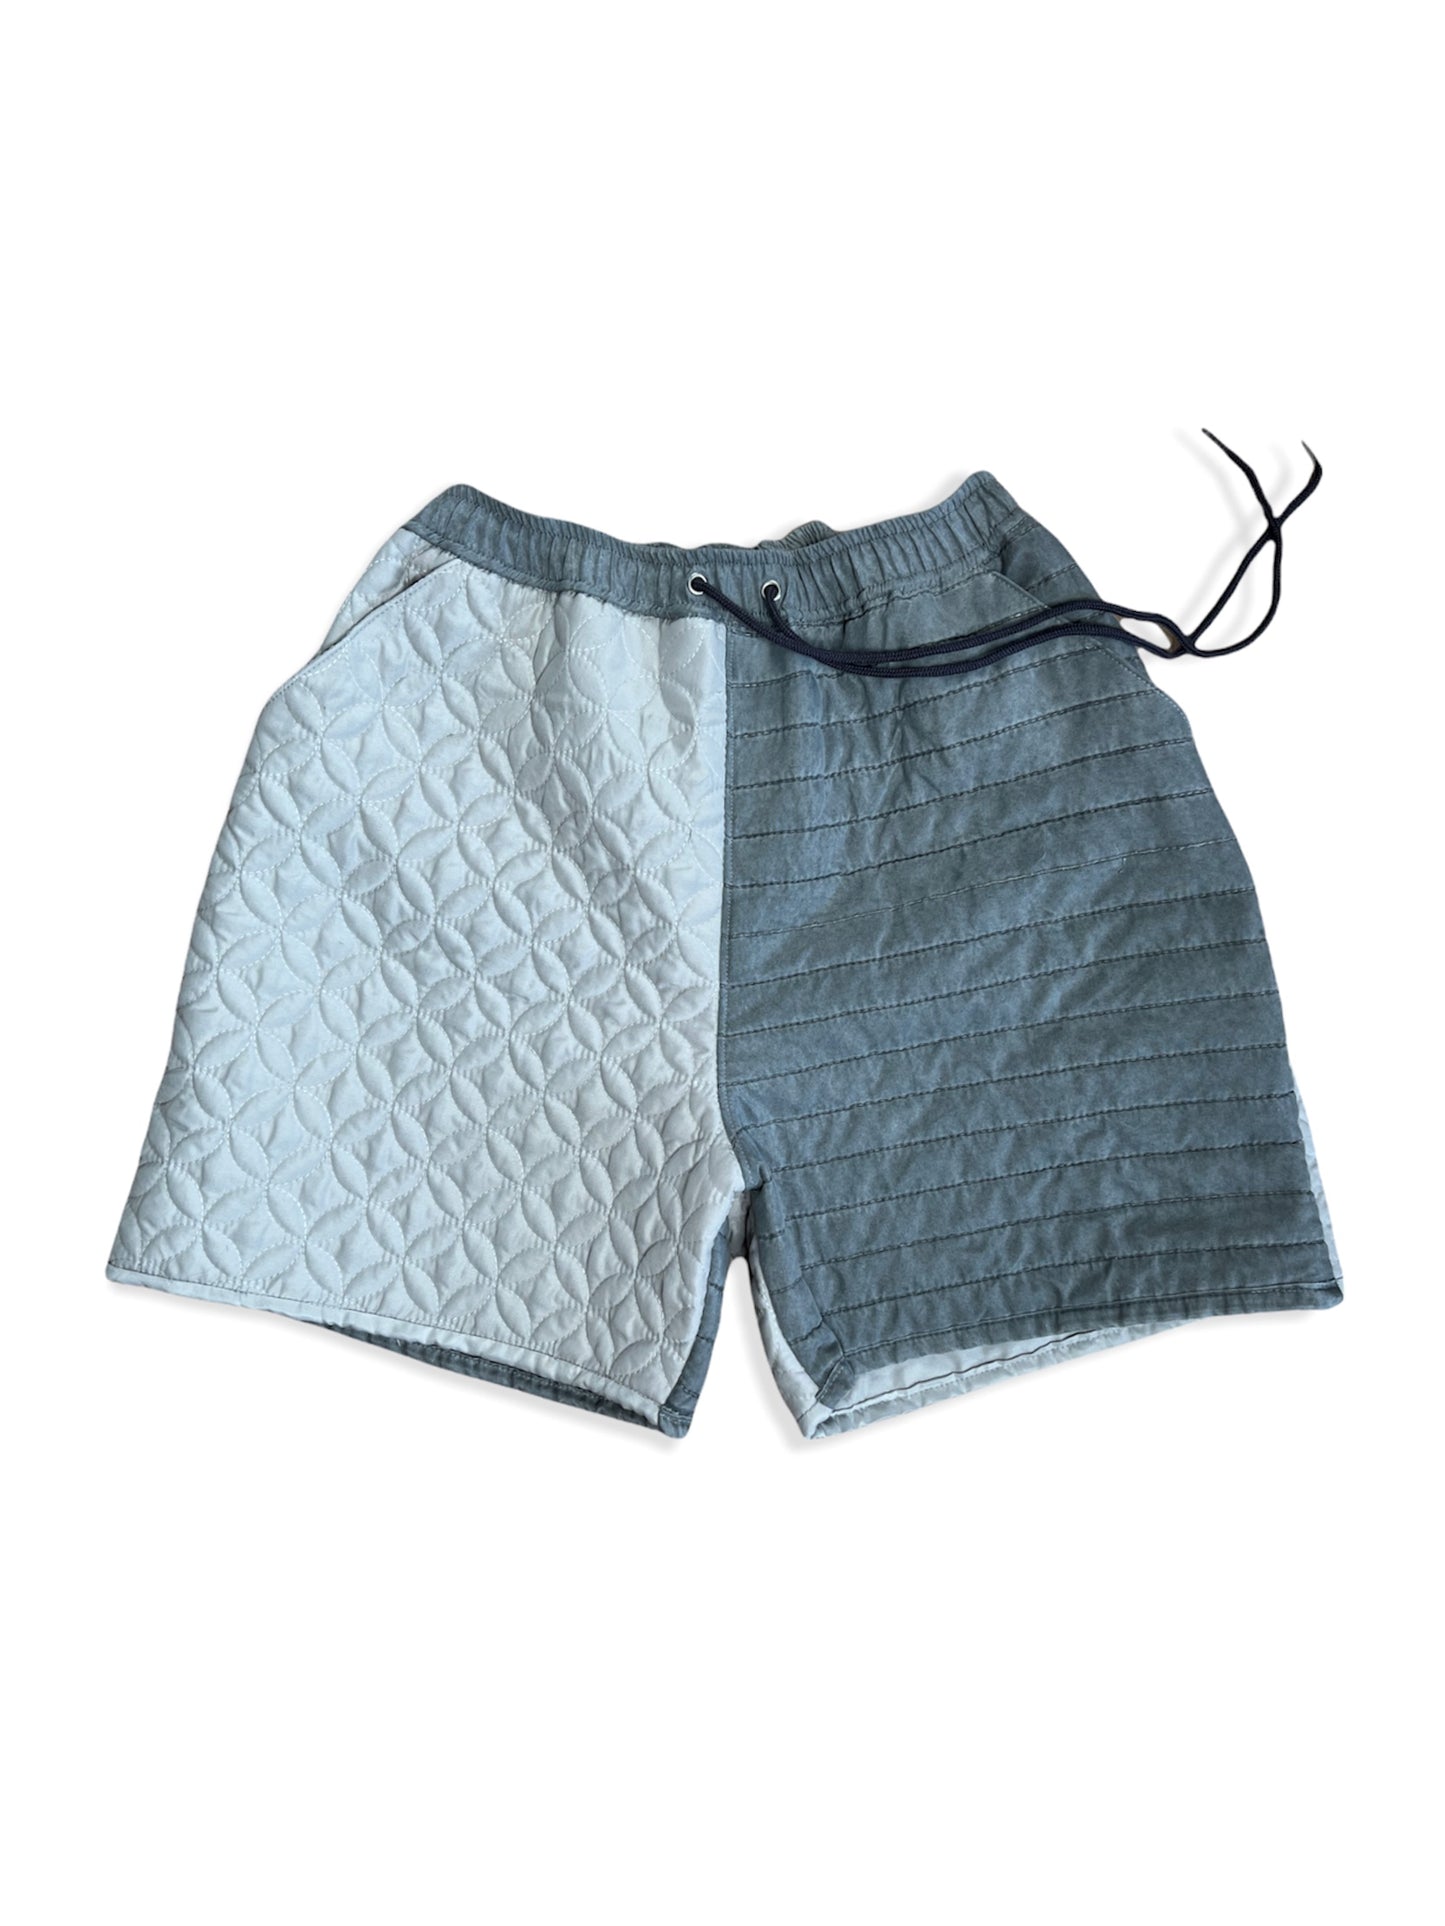 quilted shorts gray drawstring